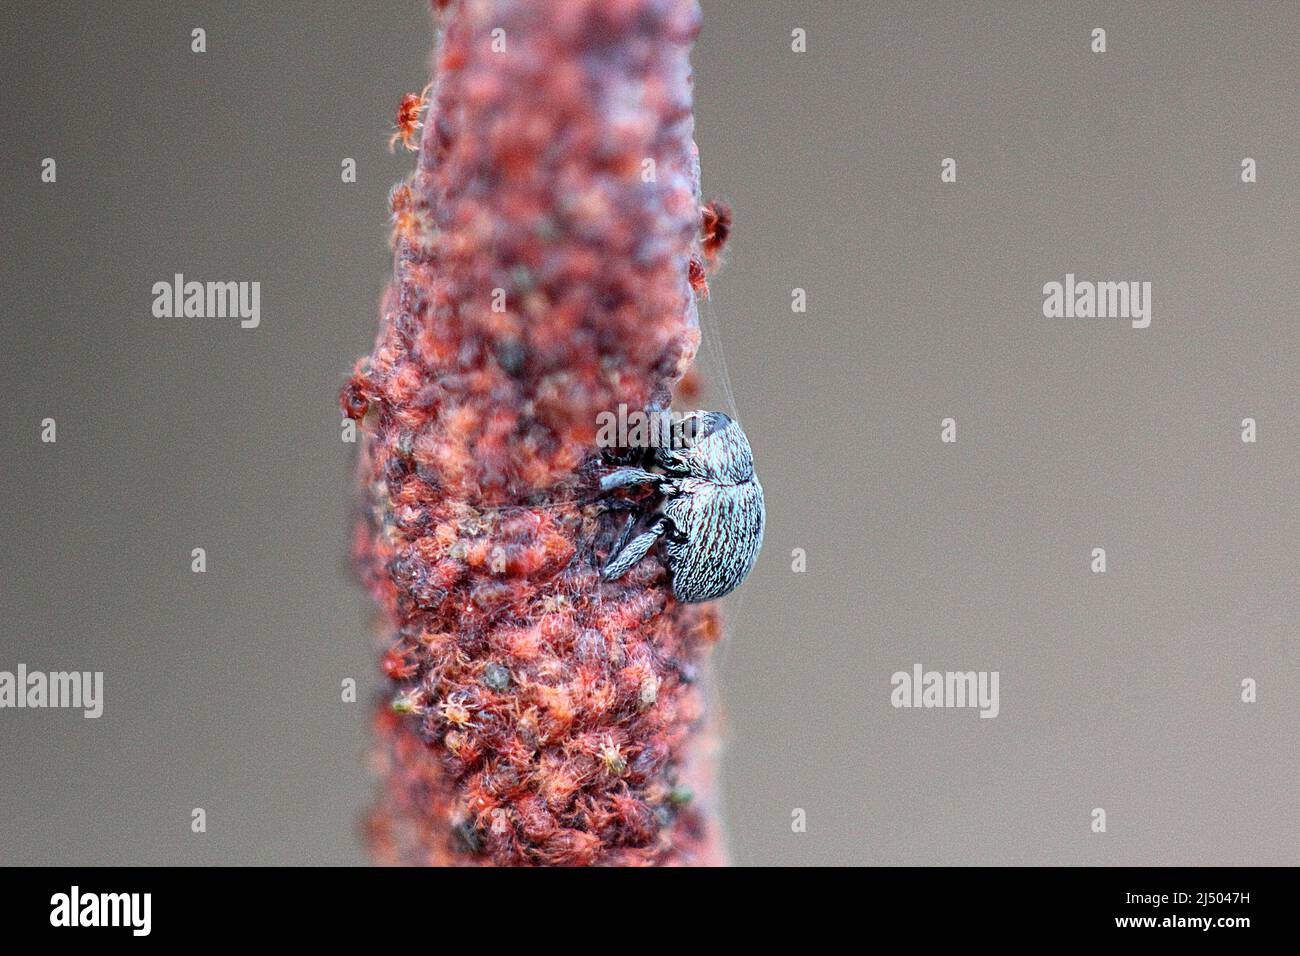 Gorse spider mite (Tetranychus lintearius) Stock Photo